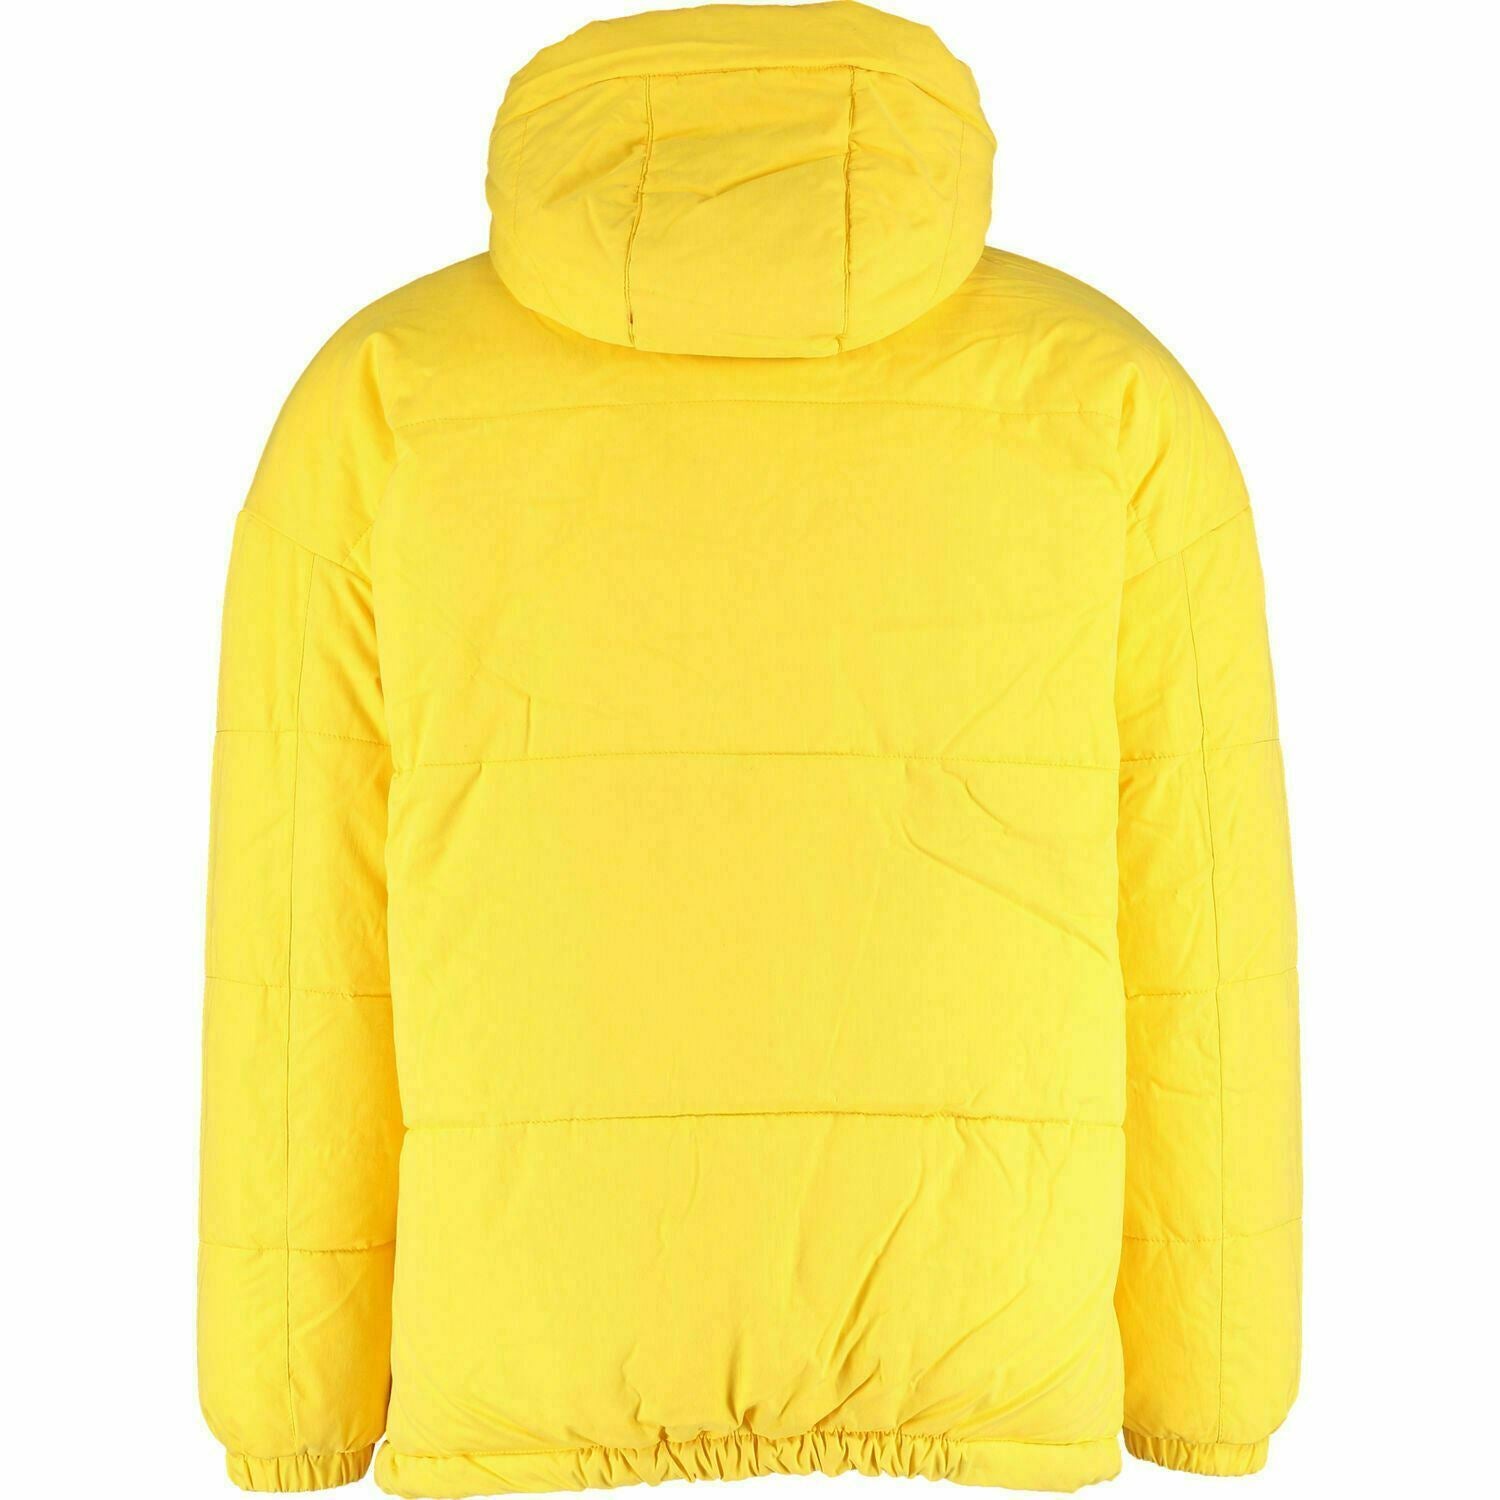 SCHOTT Men's ALASKA Warm Yellow Puffer Hooded Jacket, size XS